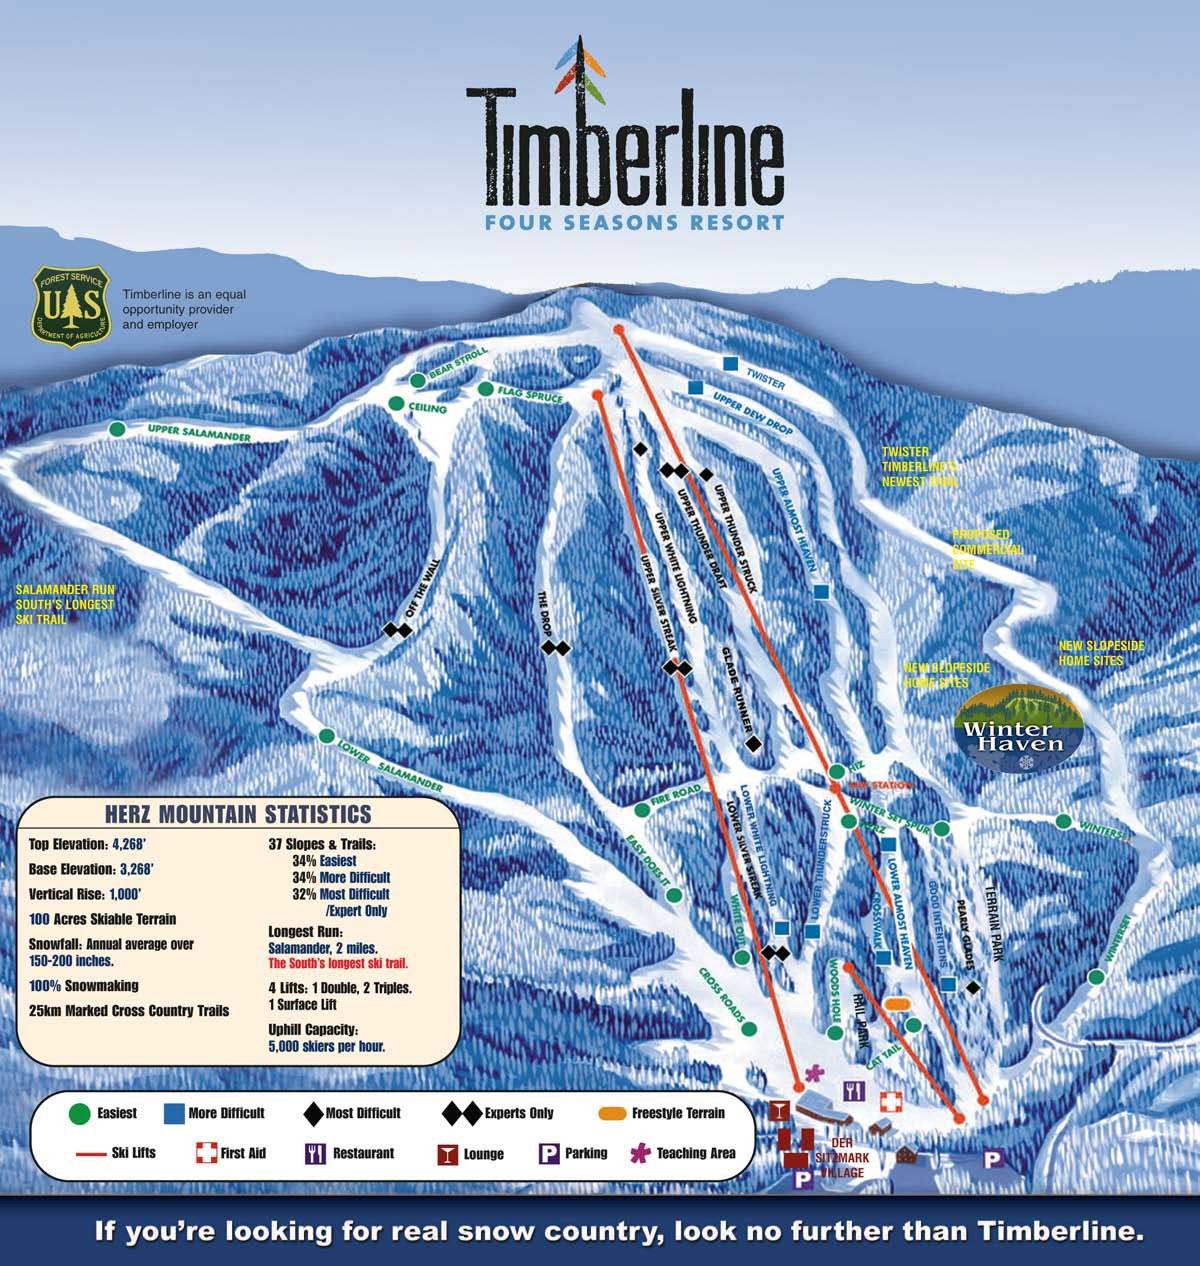 Timberline Ski Resort in WV offers Great Skiing